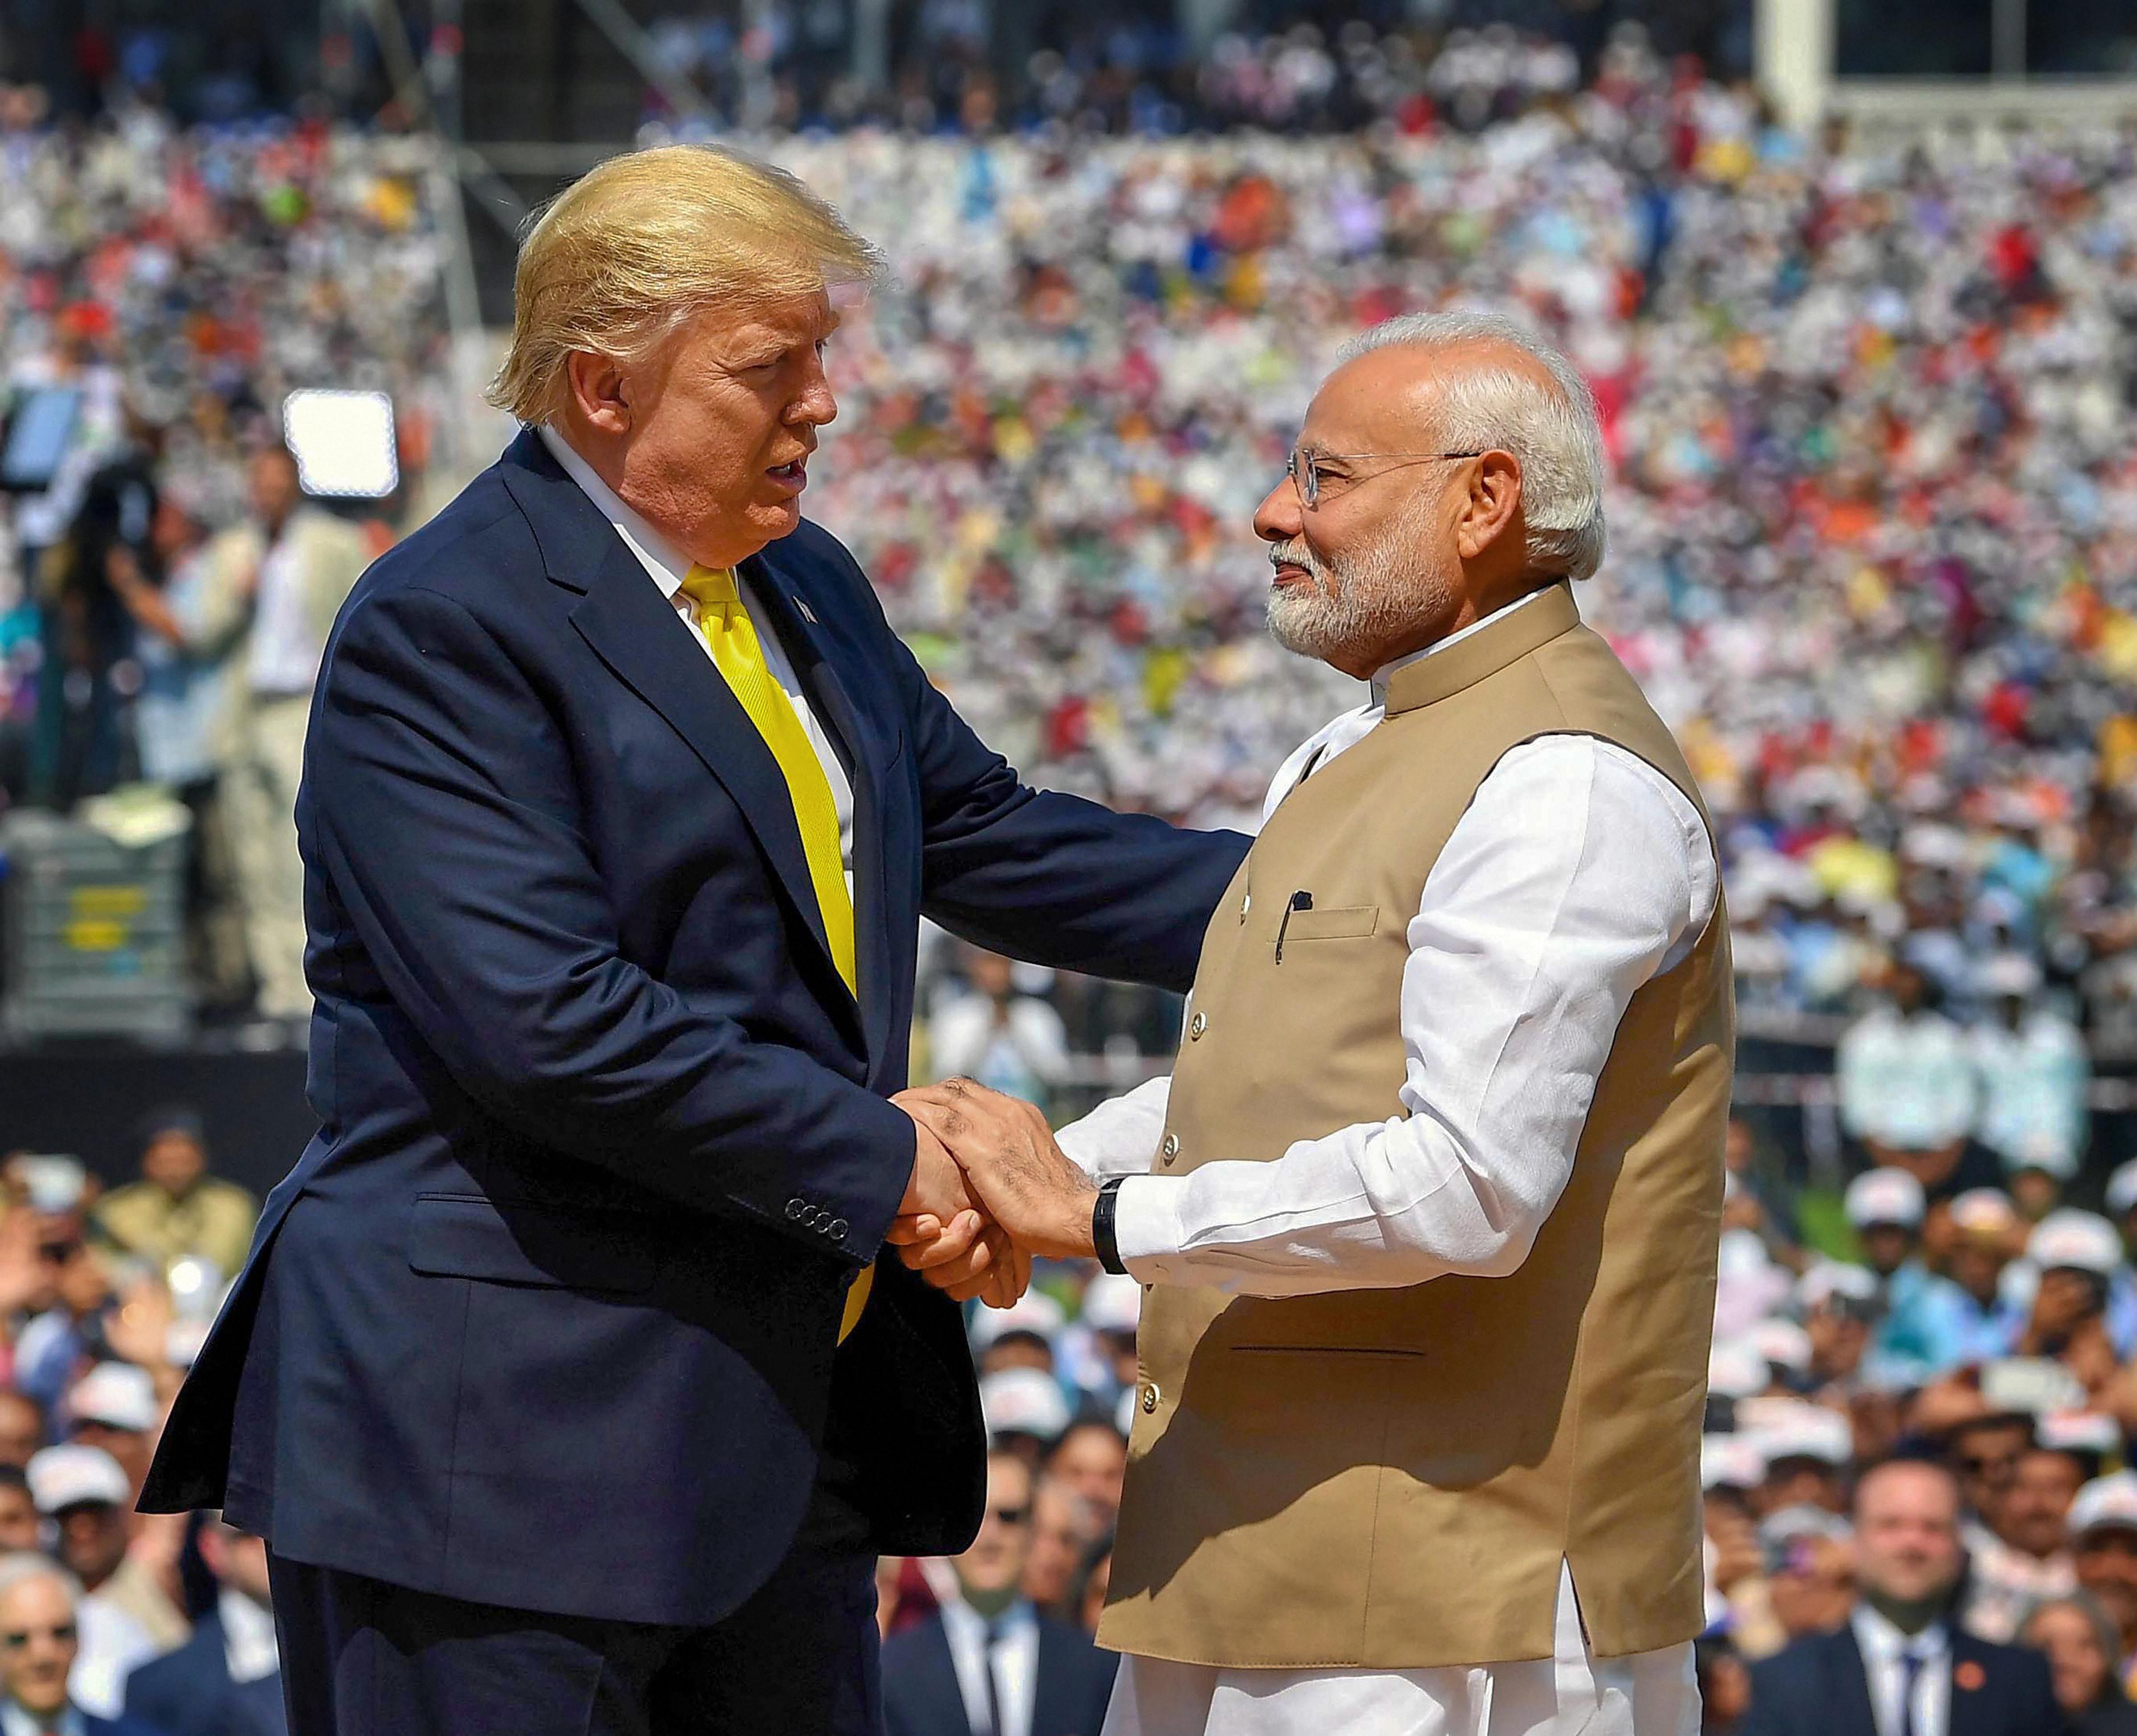 Prime Minister Narendra Modi shakes hands with US President Donald Trump during the 'Namaste Trump' event at Sardar Patel Stadium in Ahmedabad, Monday, Feb. 24, 2020. Credit: PTI Photo